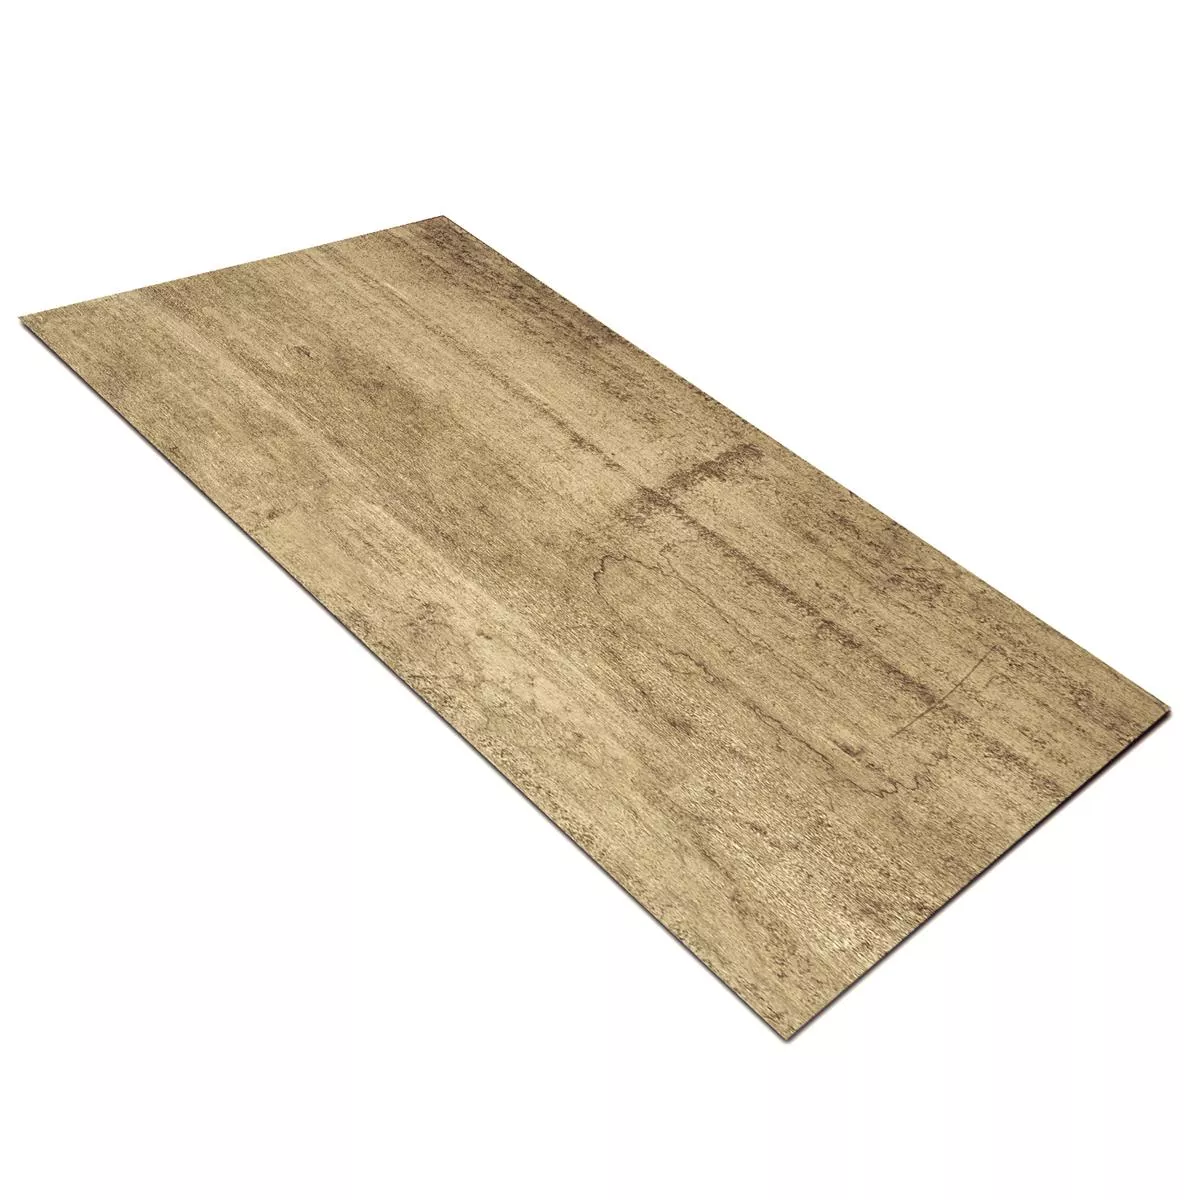 Sample Wood Optic Floor Tiles Colonia Birke 45x90cm